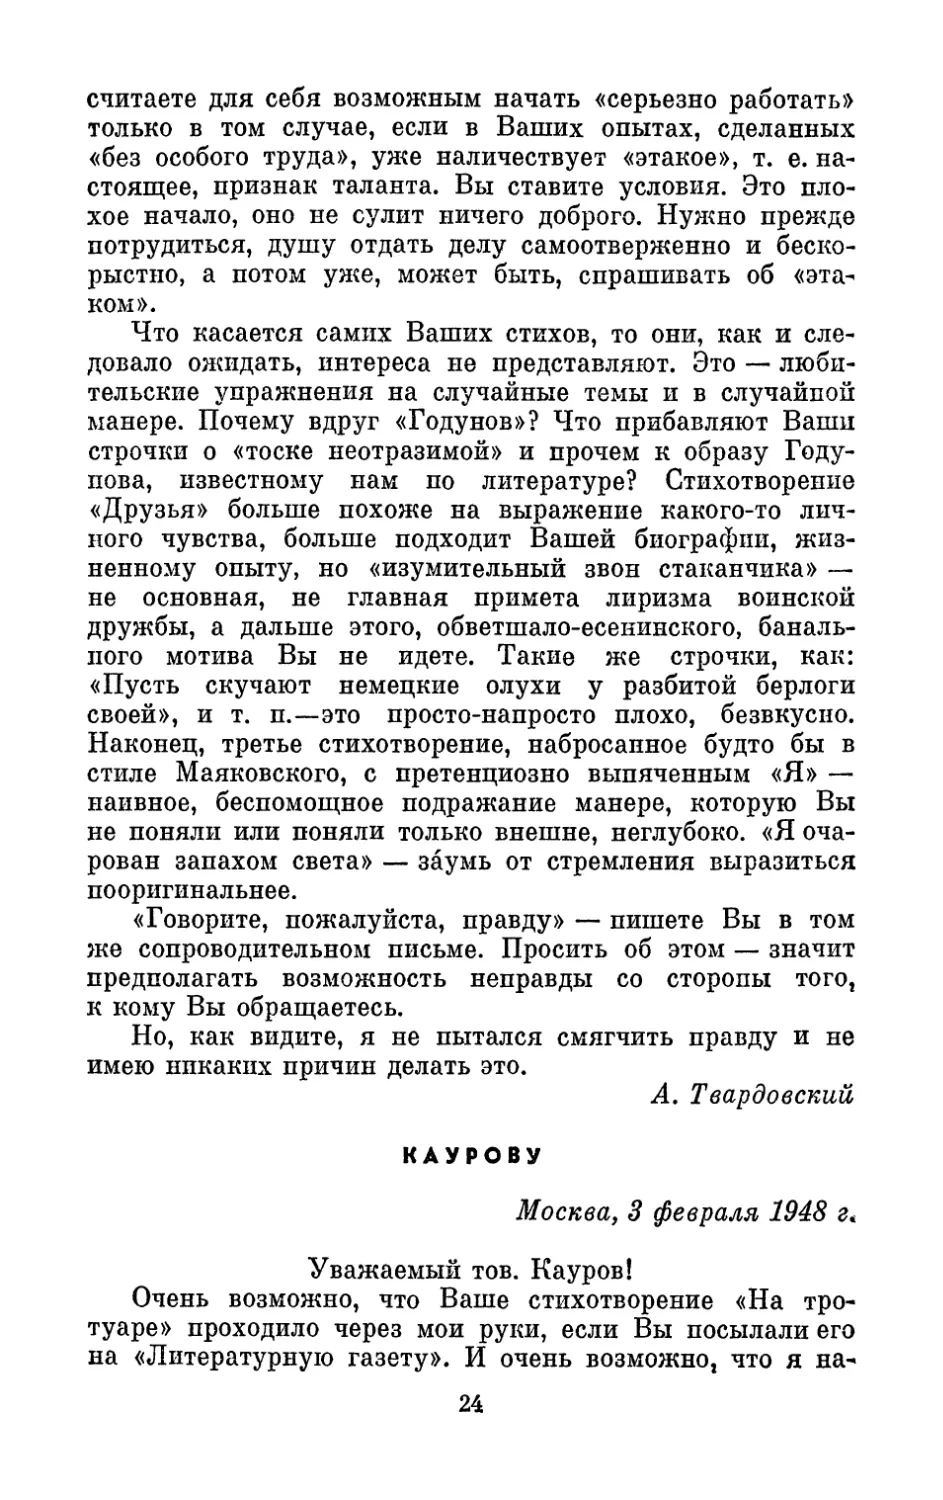 Каурову, 3 февраля 1948 г.